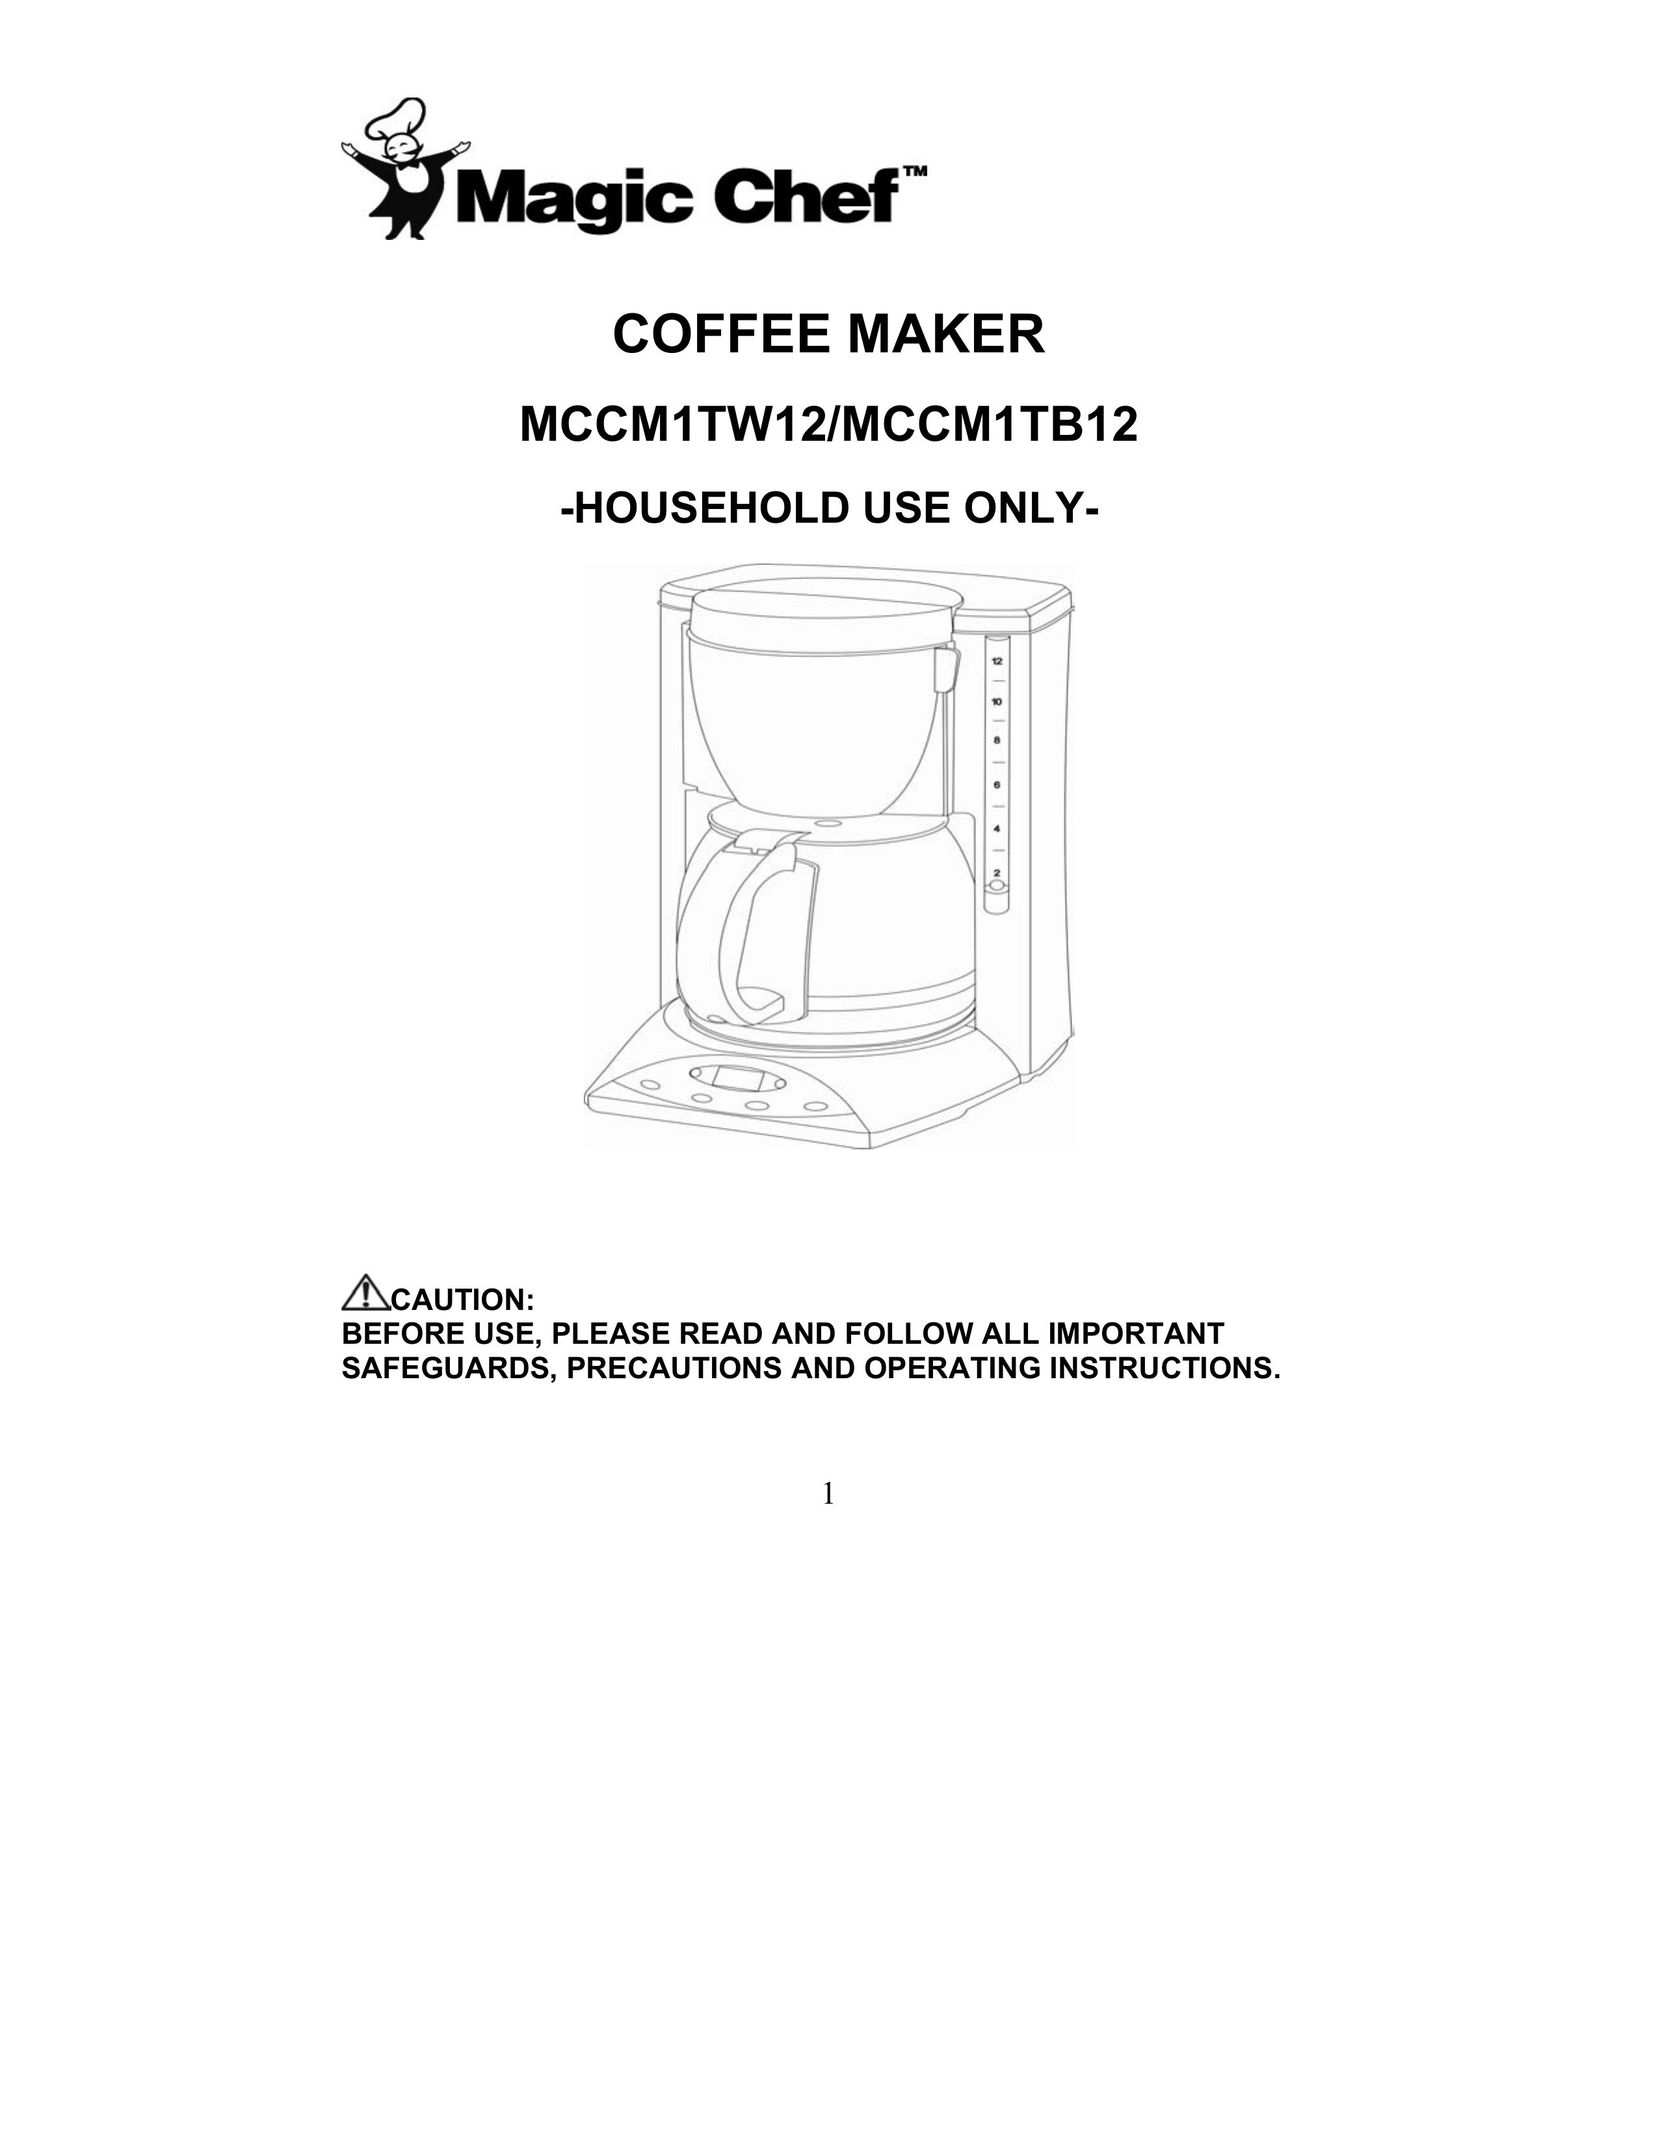 Magic Chef MCCM1TW12 Coffeemaker User Manual